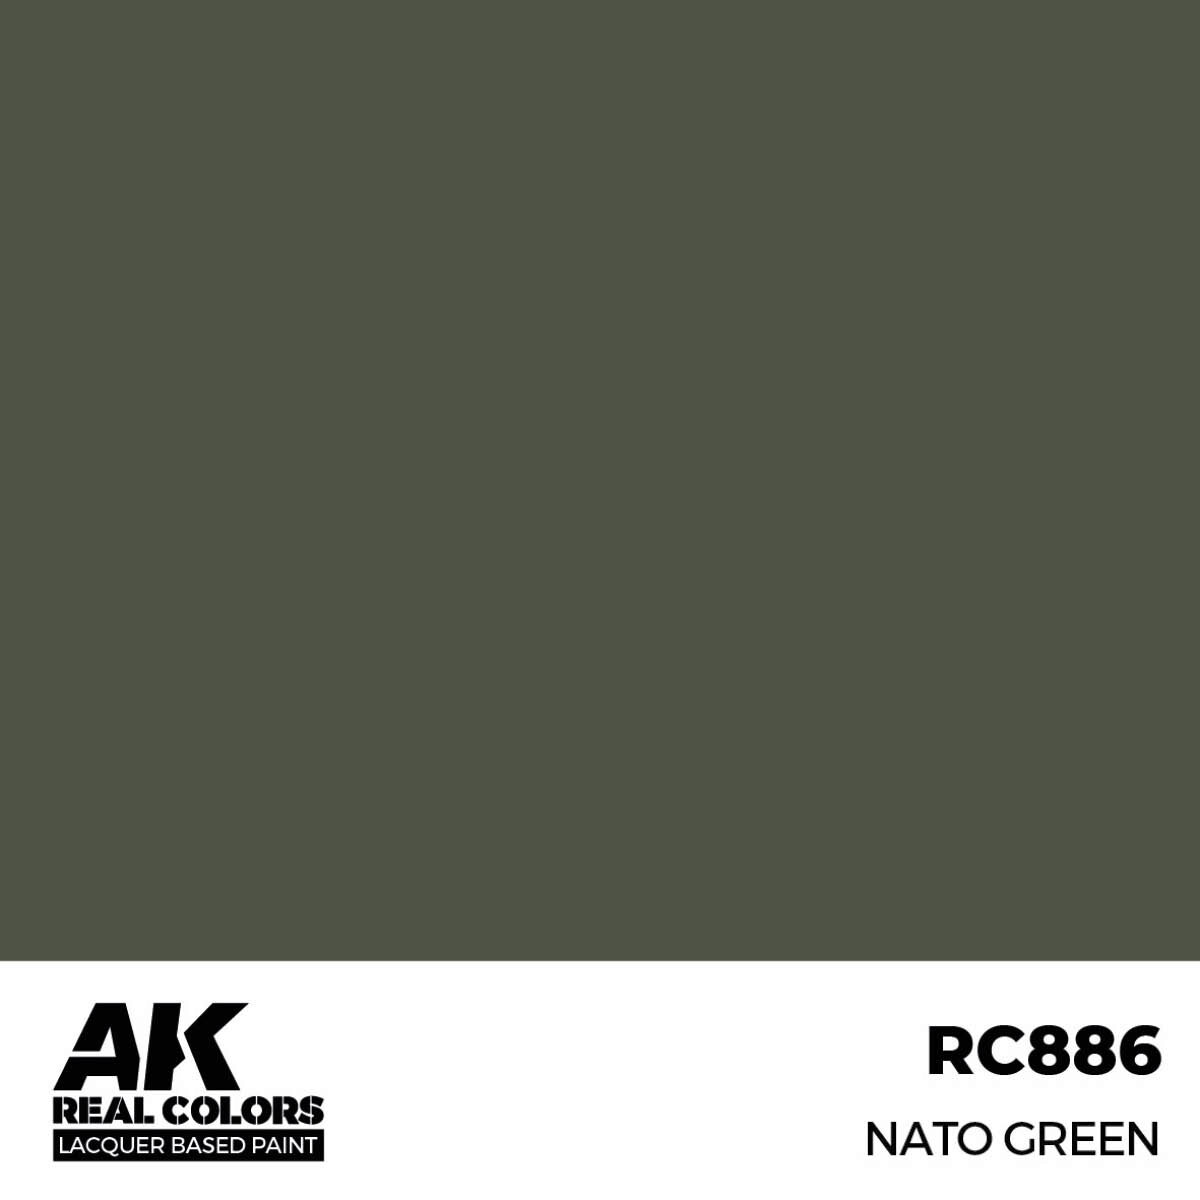 AK RC886 Real Colors NATO Green 17 ml.